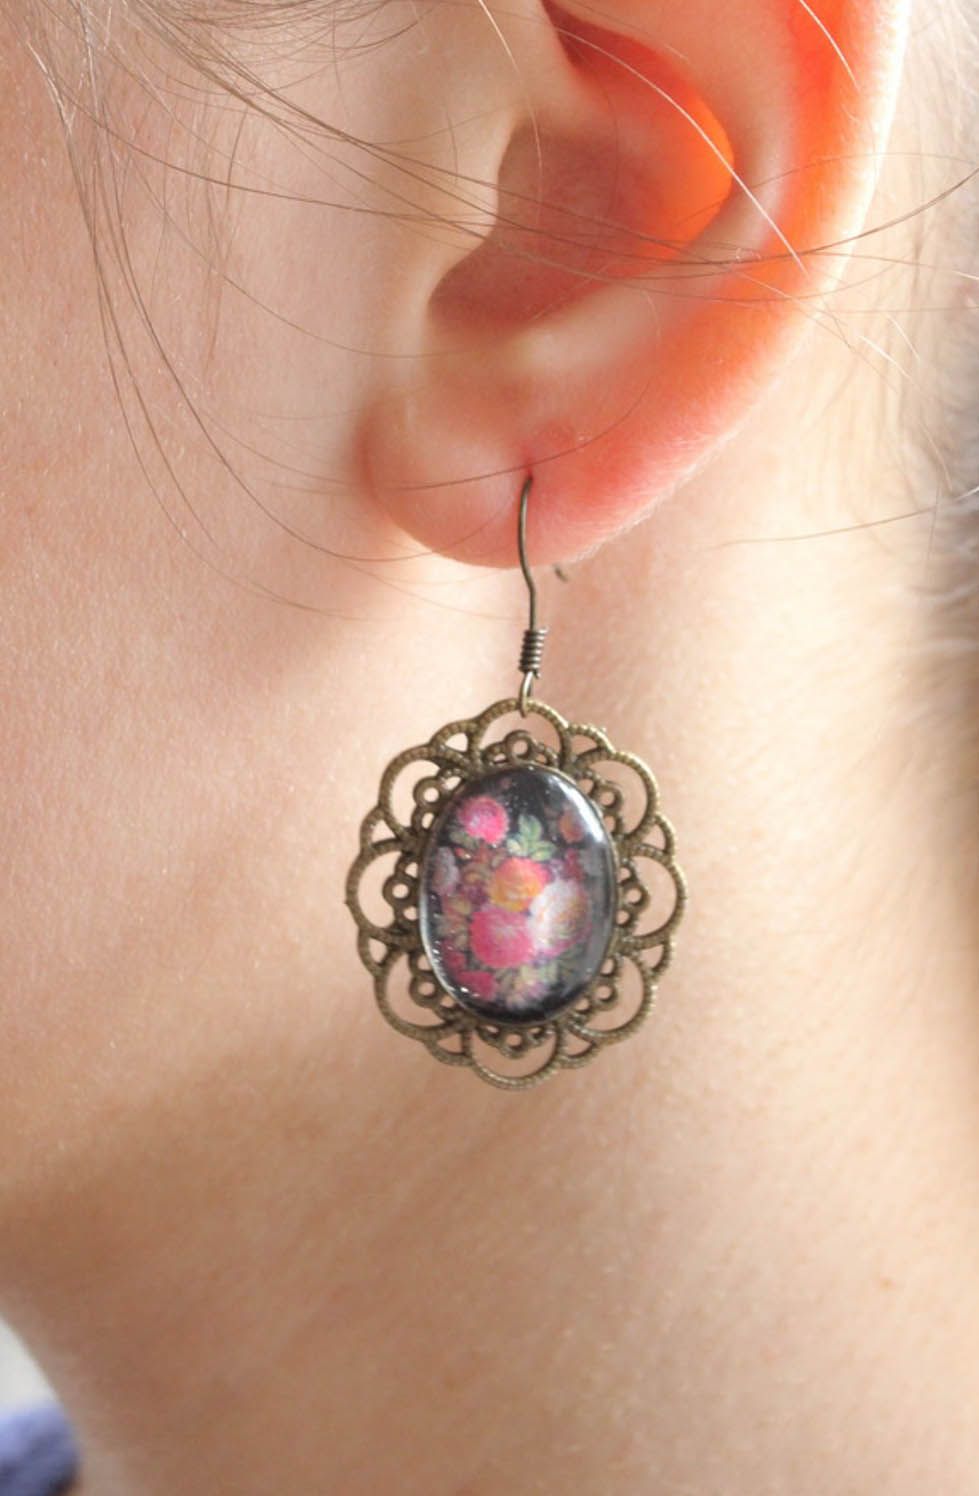 Earrings coated with jewelry glaze photo 1